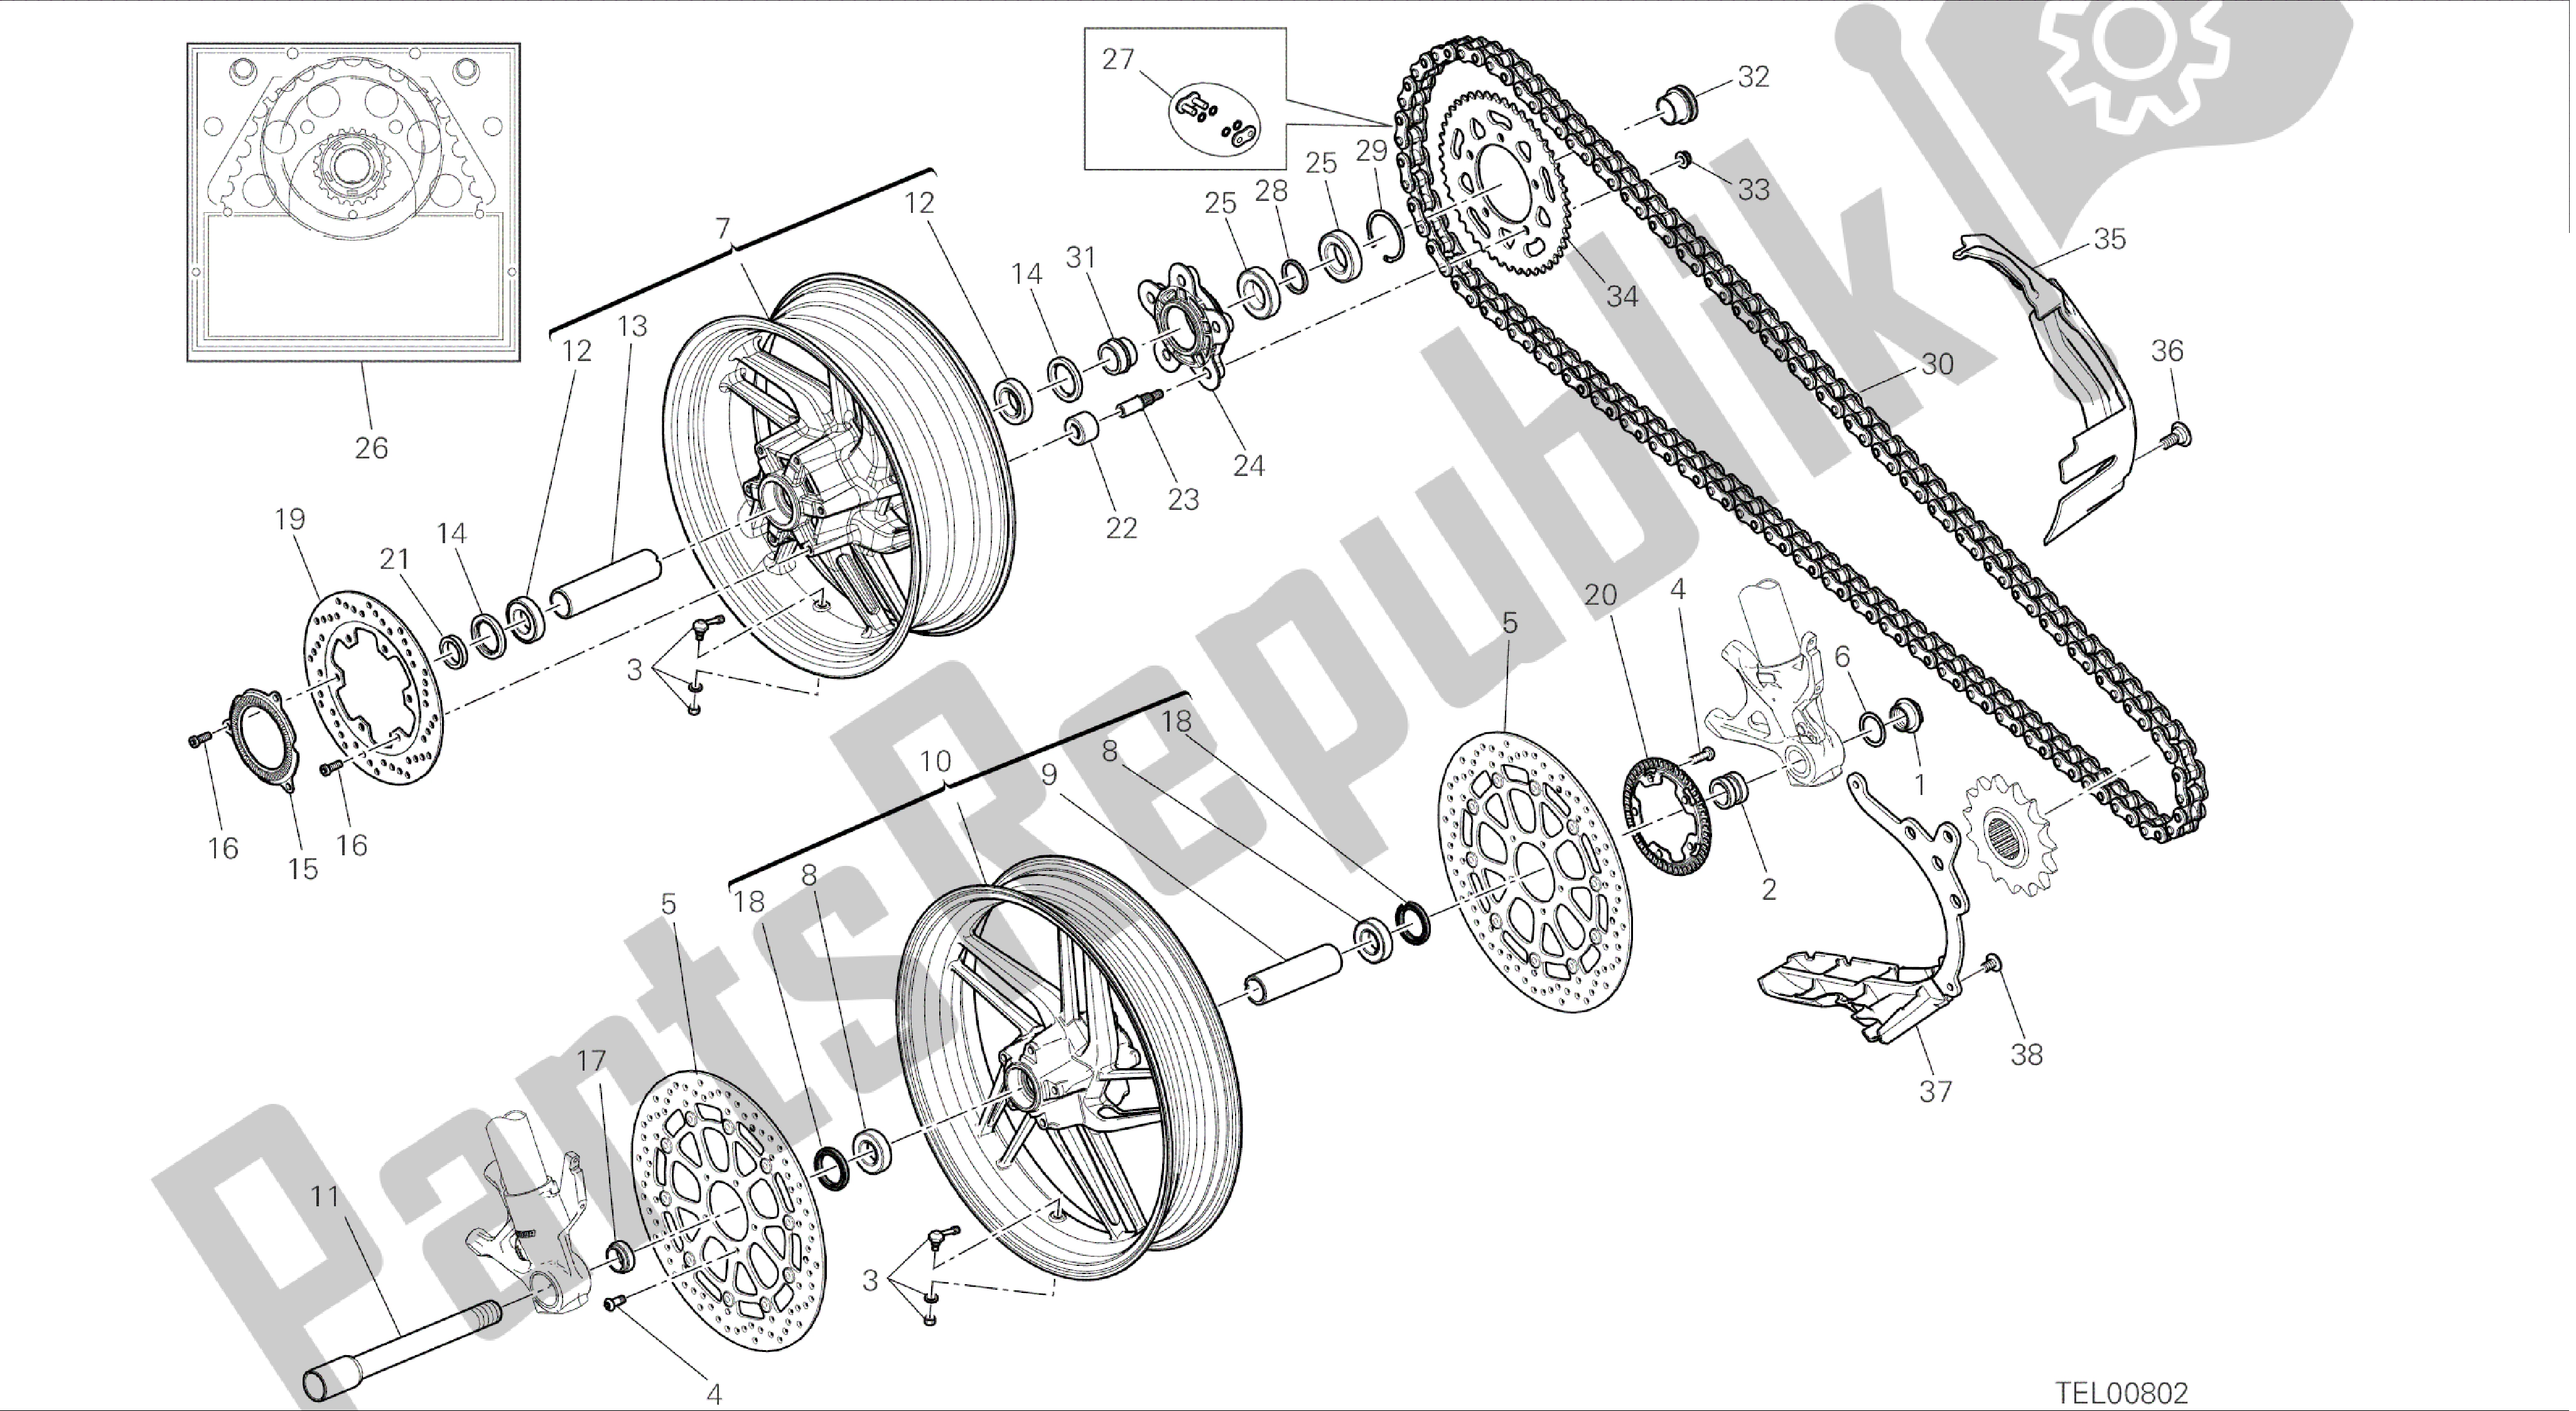 Todas las partes para Dibujo 026 - Ruota Anteriore E Posteriore [mod: 899abs; Xst: Marco De Grupo Aus, Eur, Fra, Jap, Twn] de Ducati Panigale 899 2014